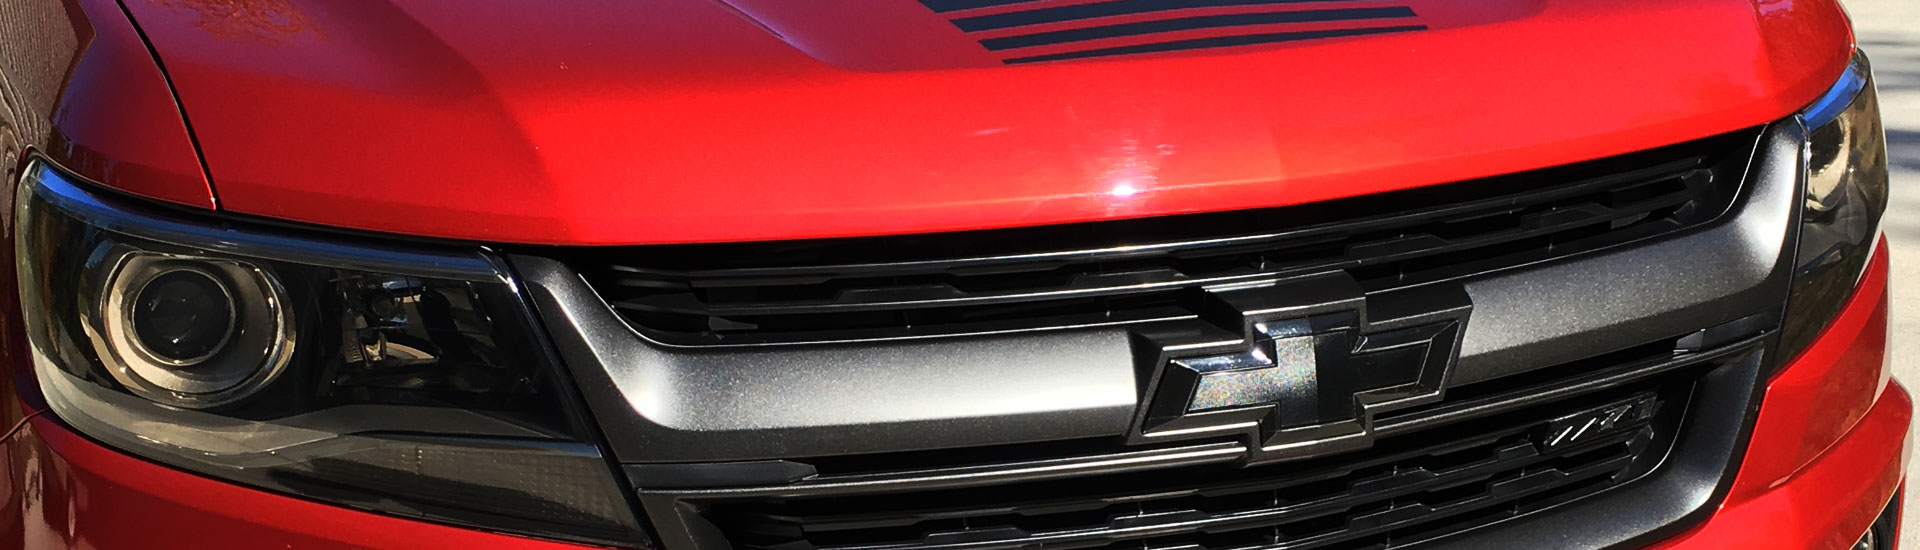 Rvinyl Rtint Headlight Tint Covers for Chevrolet Colorado 2015-2020 Chameleon Smoke 